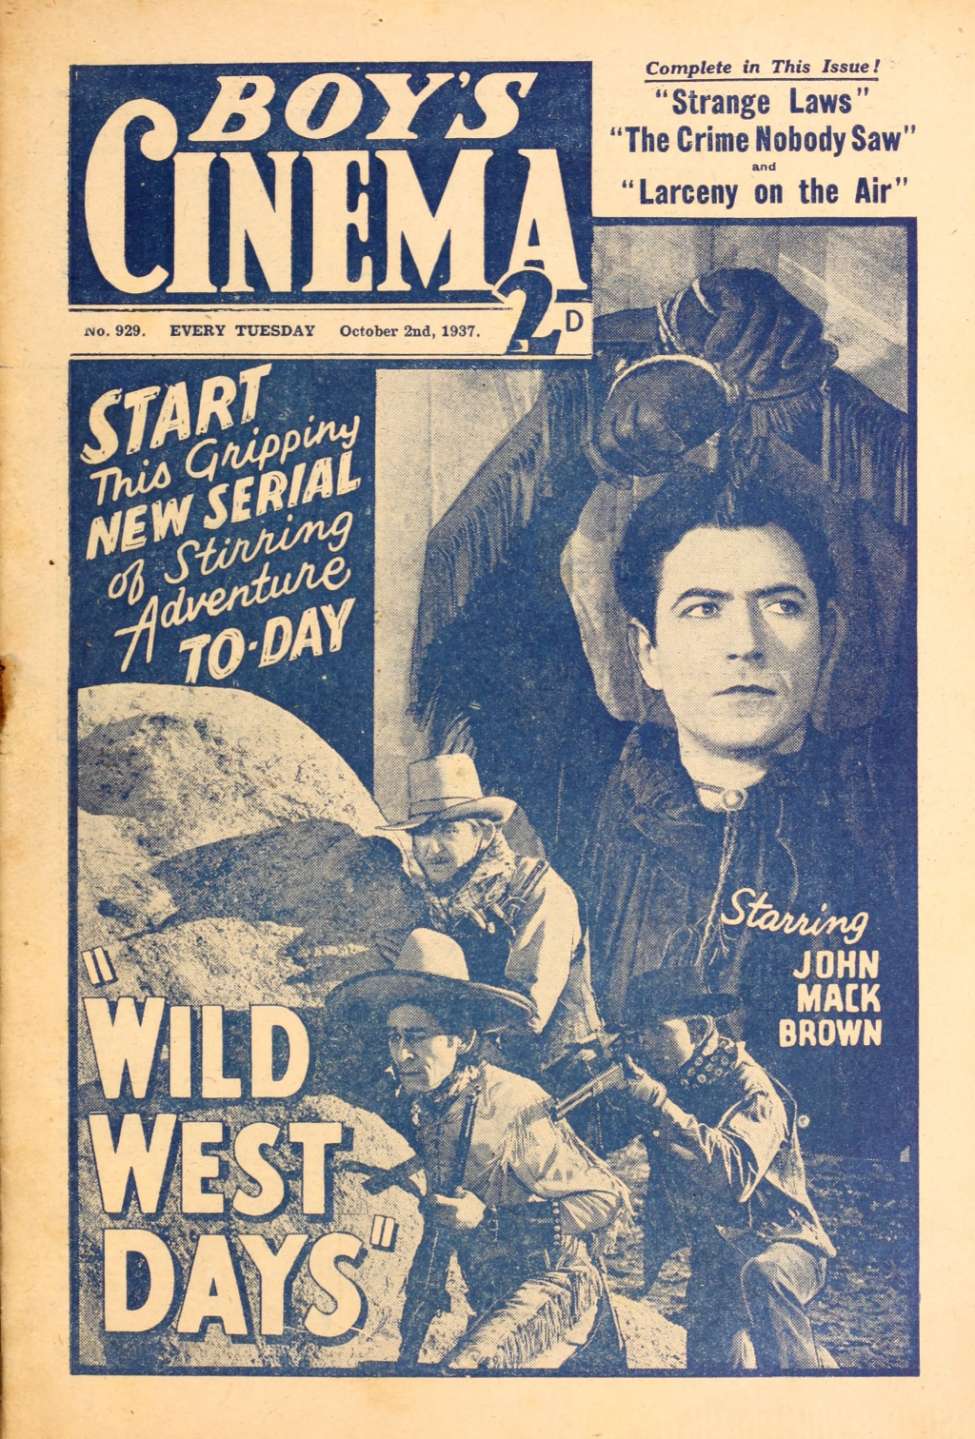 Comic Book Cover For Boy's Cinema 929 - Wild West Days - John Mack Brown